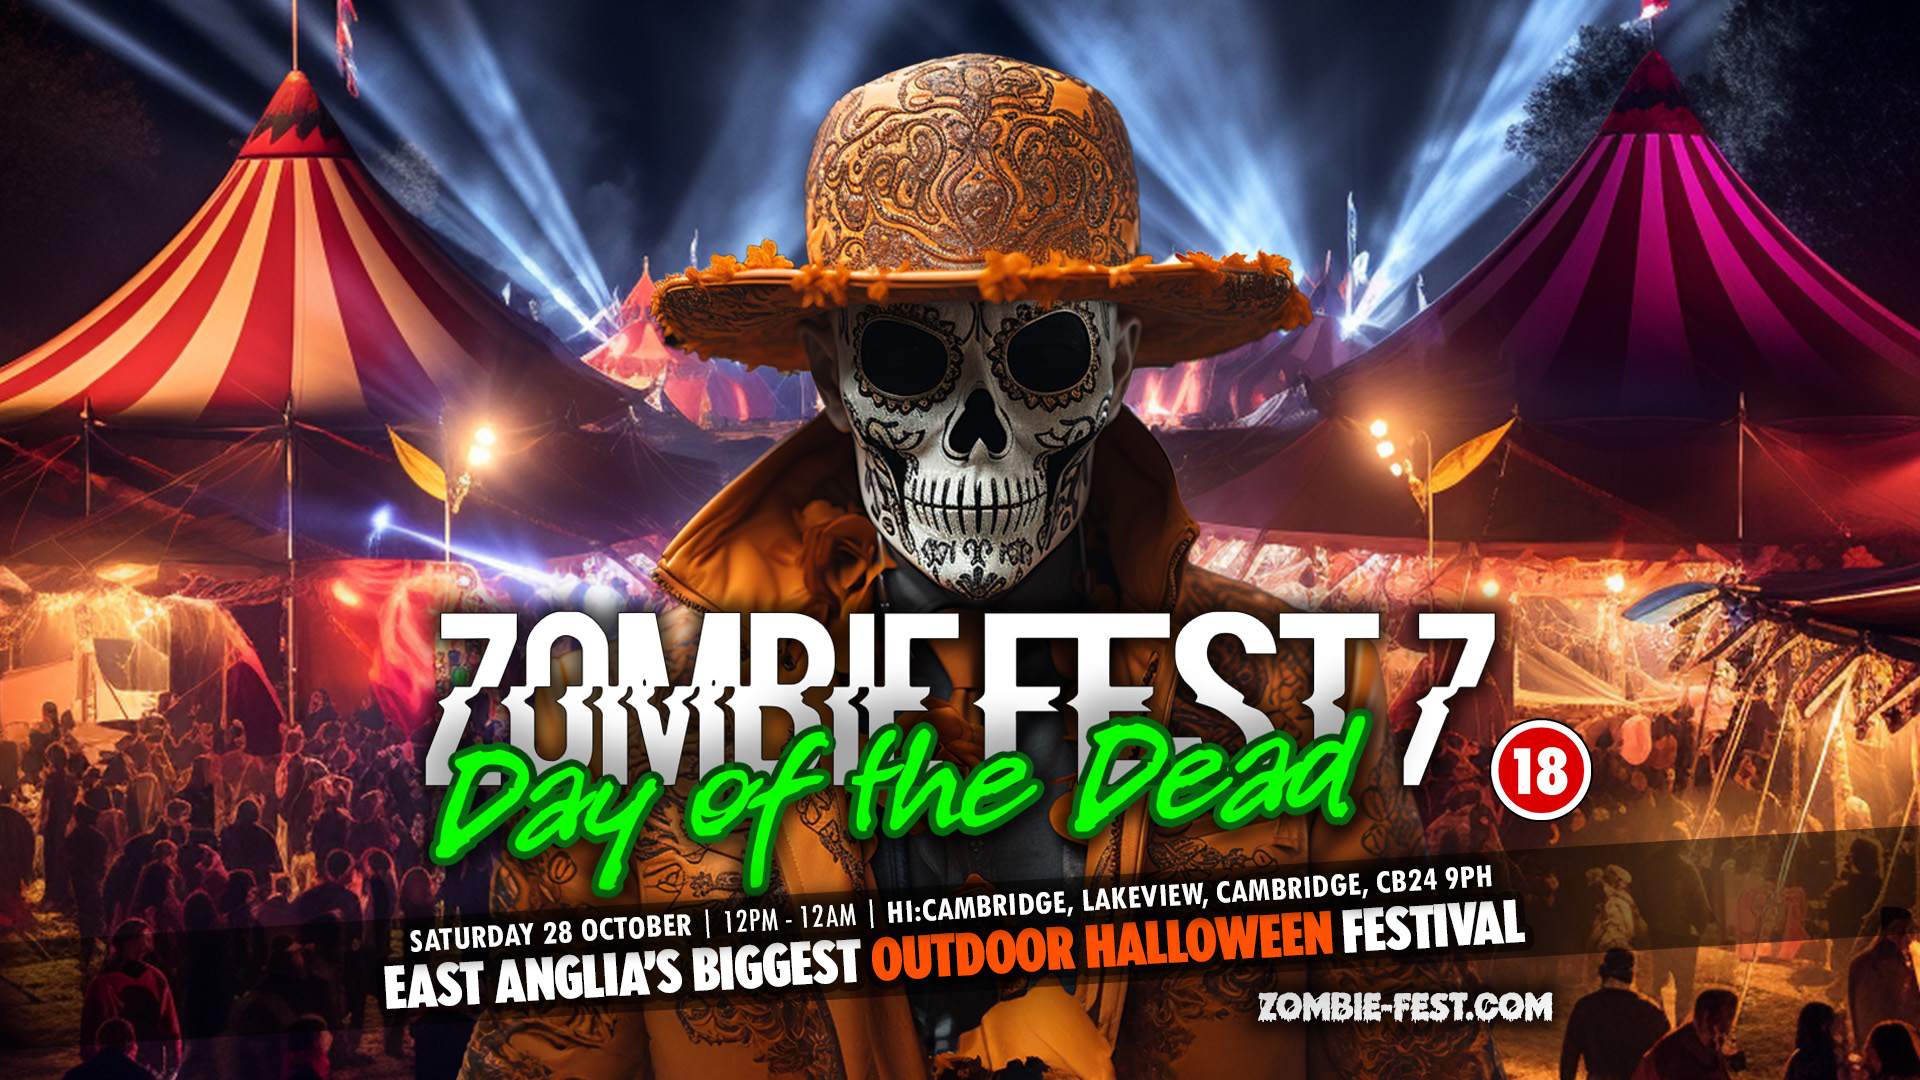 Zombie Fest - Day of the Dead - Cambridge Halloween Festival - フライヤー表